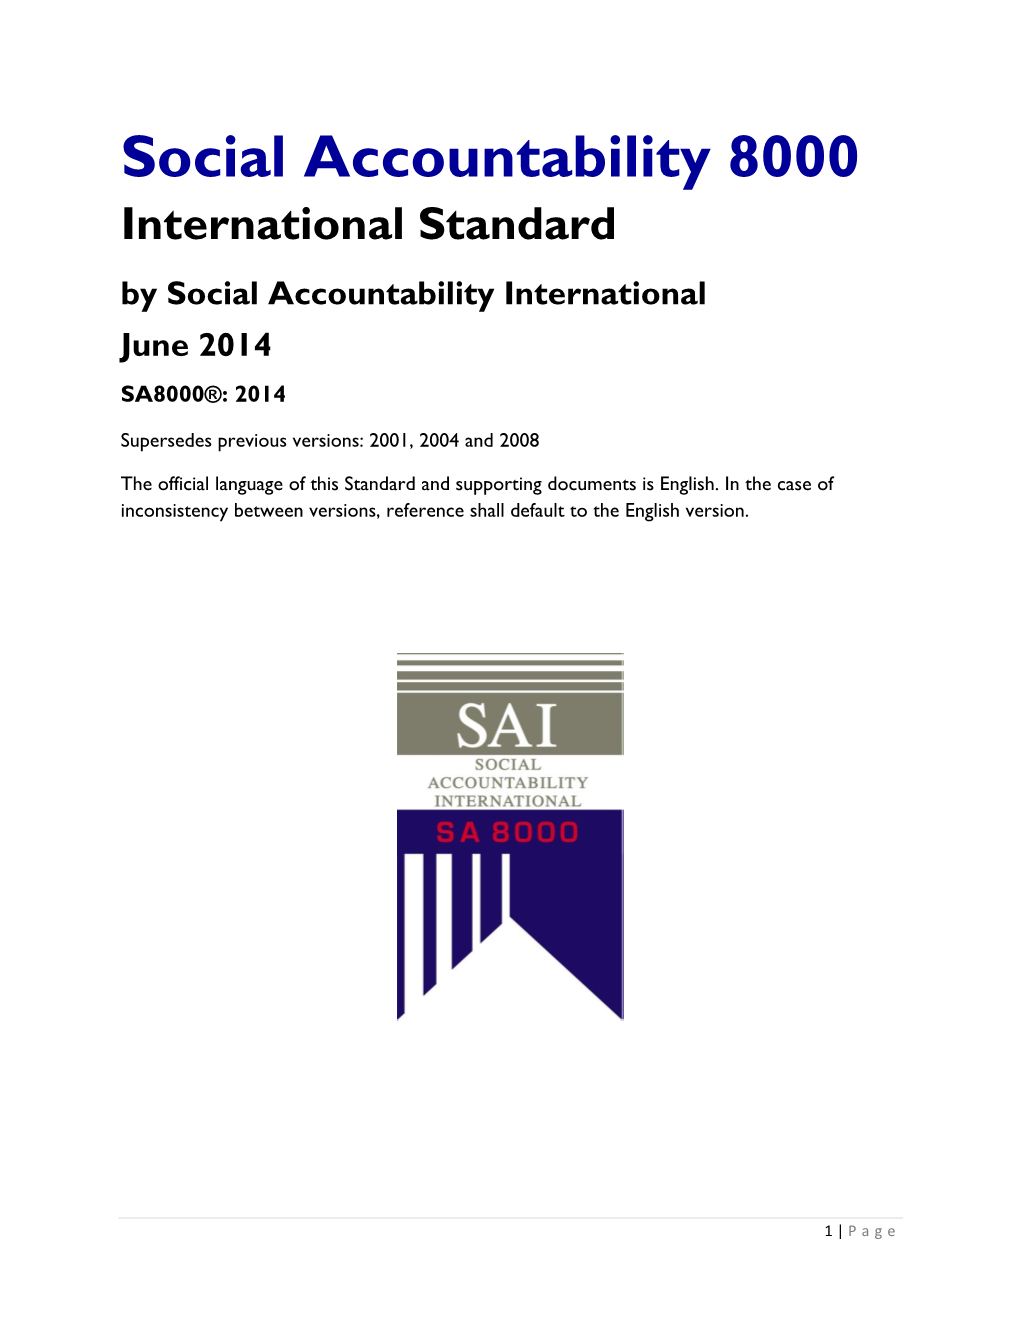 Social Accountability 8000 International Standard by Social Accountability International June 2014 SA8000®: 2014